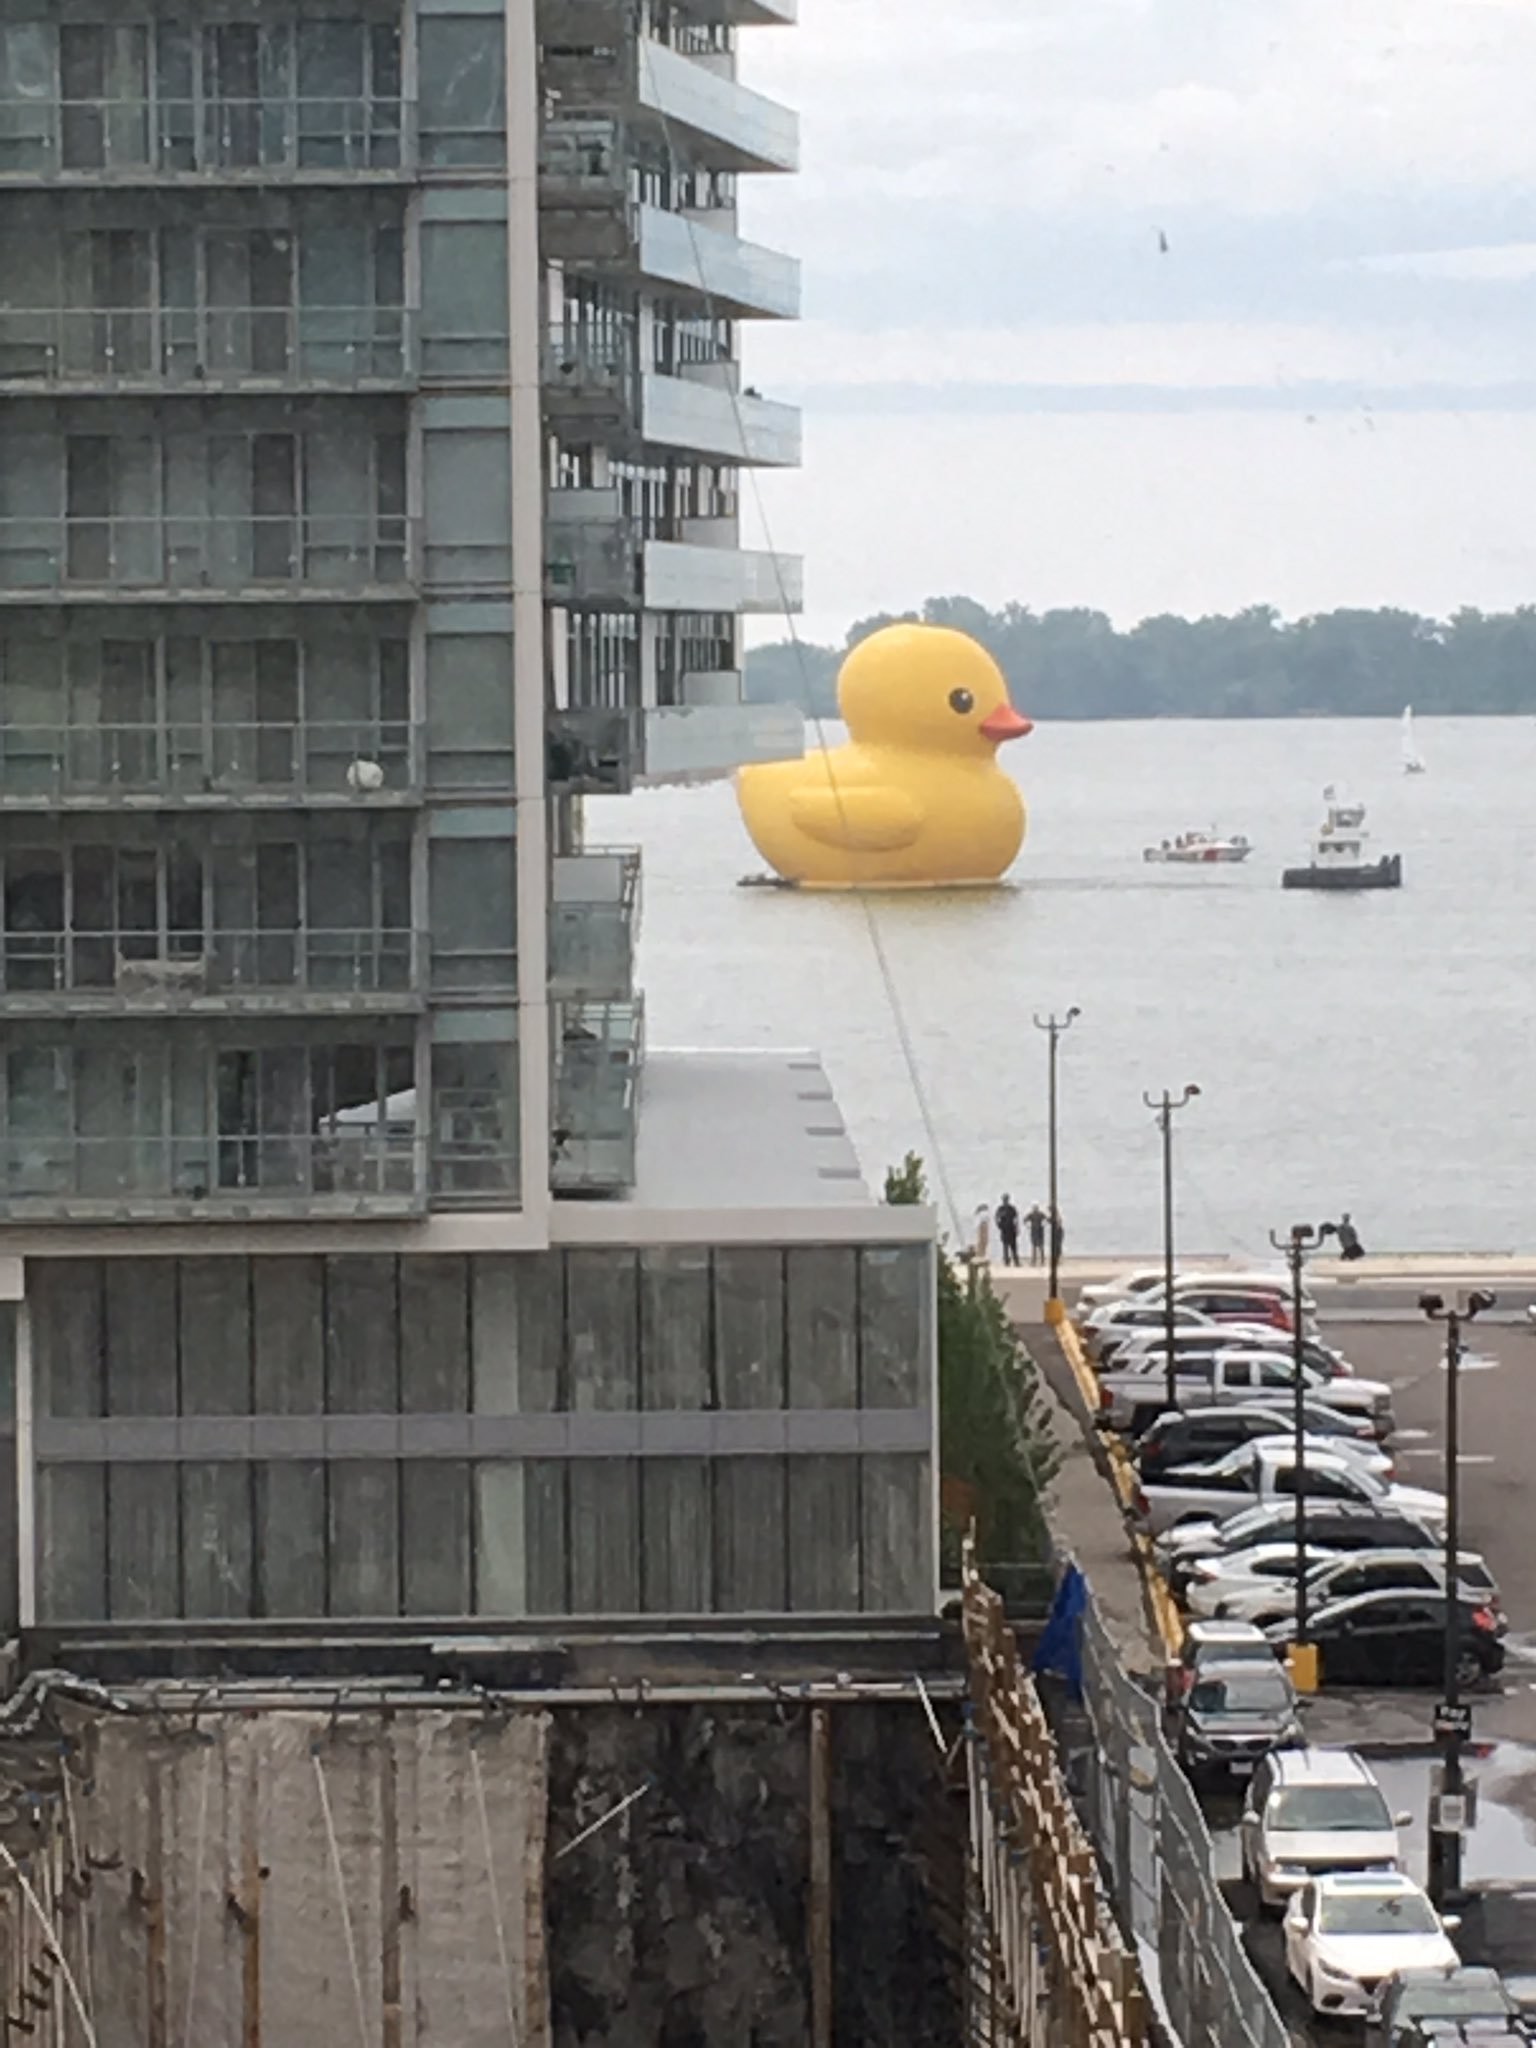 1536x2048 Giant rubber duck on Lake Ontario ! #toronto #rubberduck #Canada150 https:/